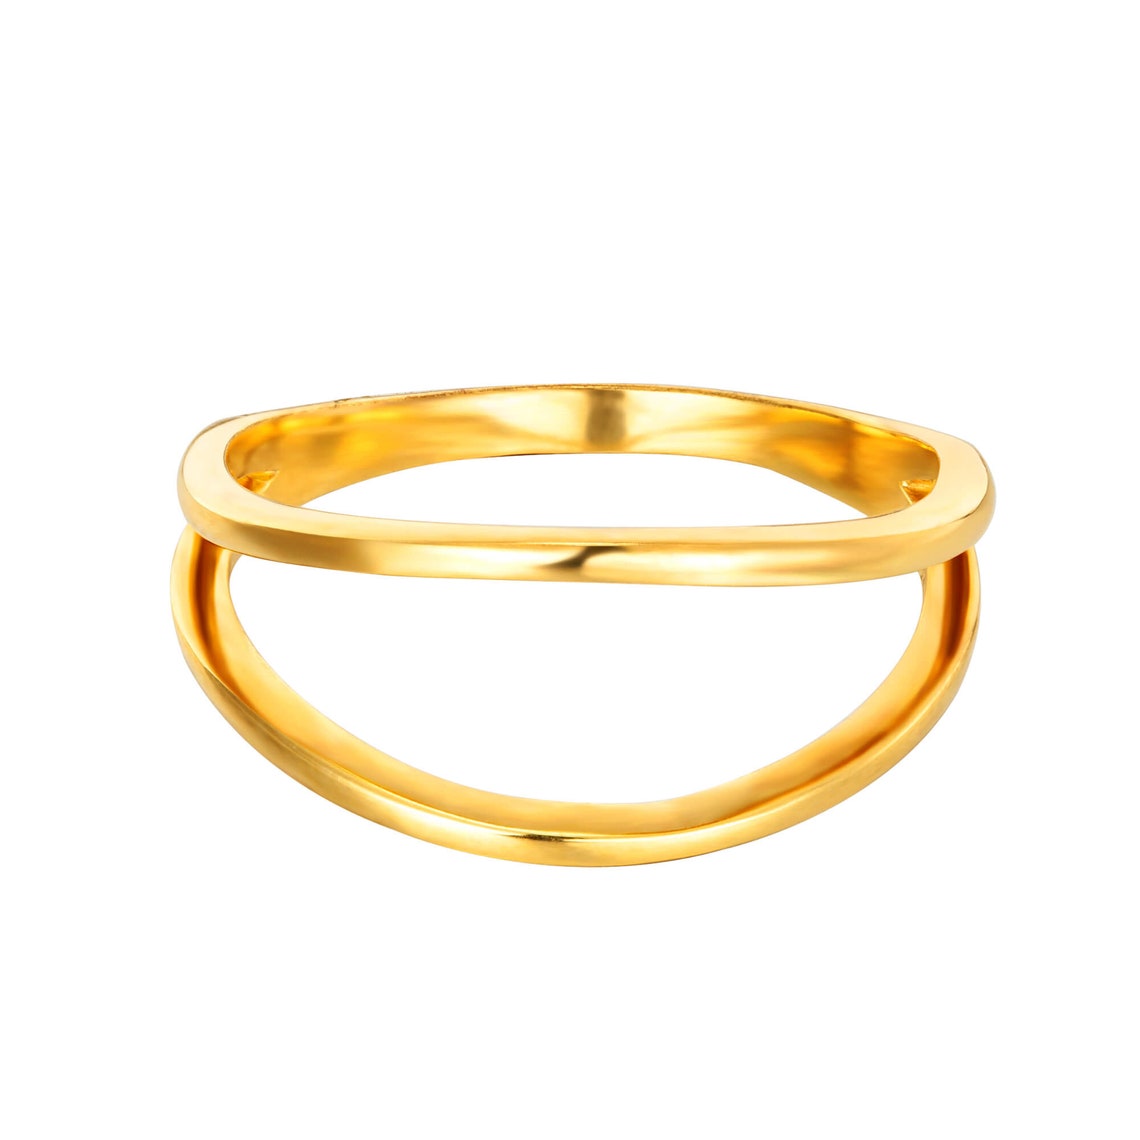 Double bar ring gold stacking ring chevron ring bar ring | Etsy